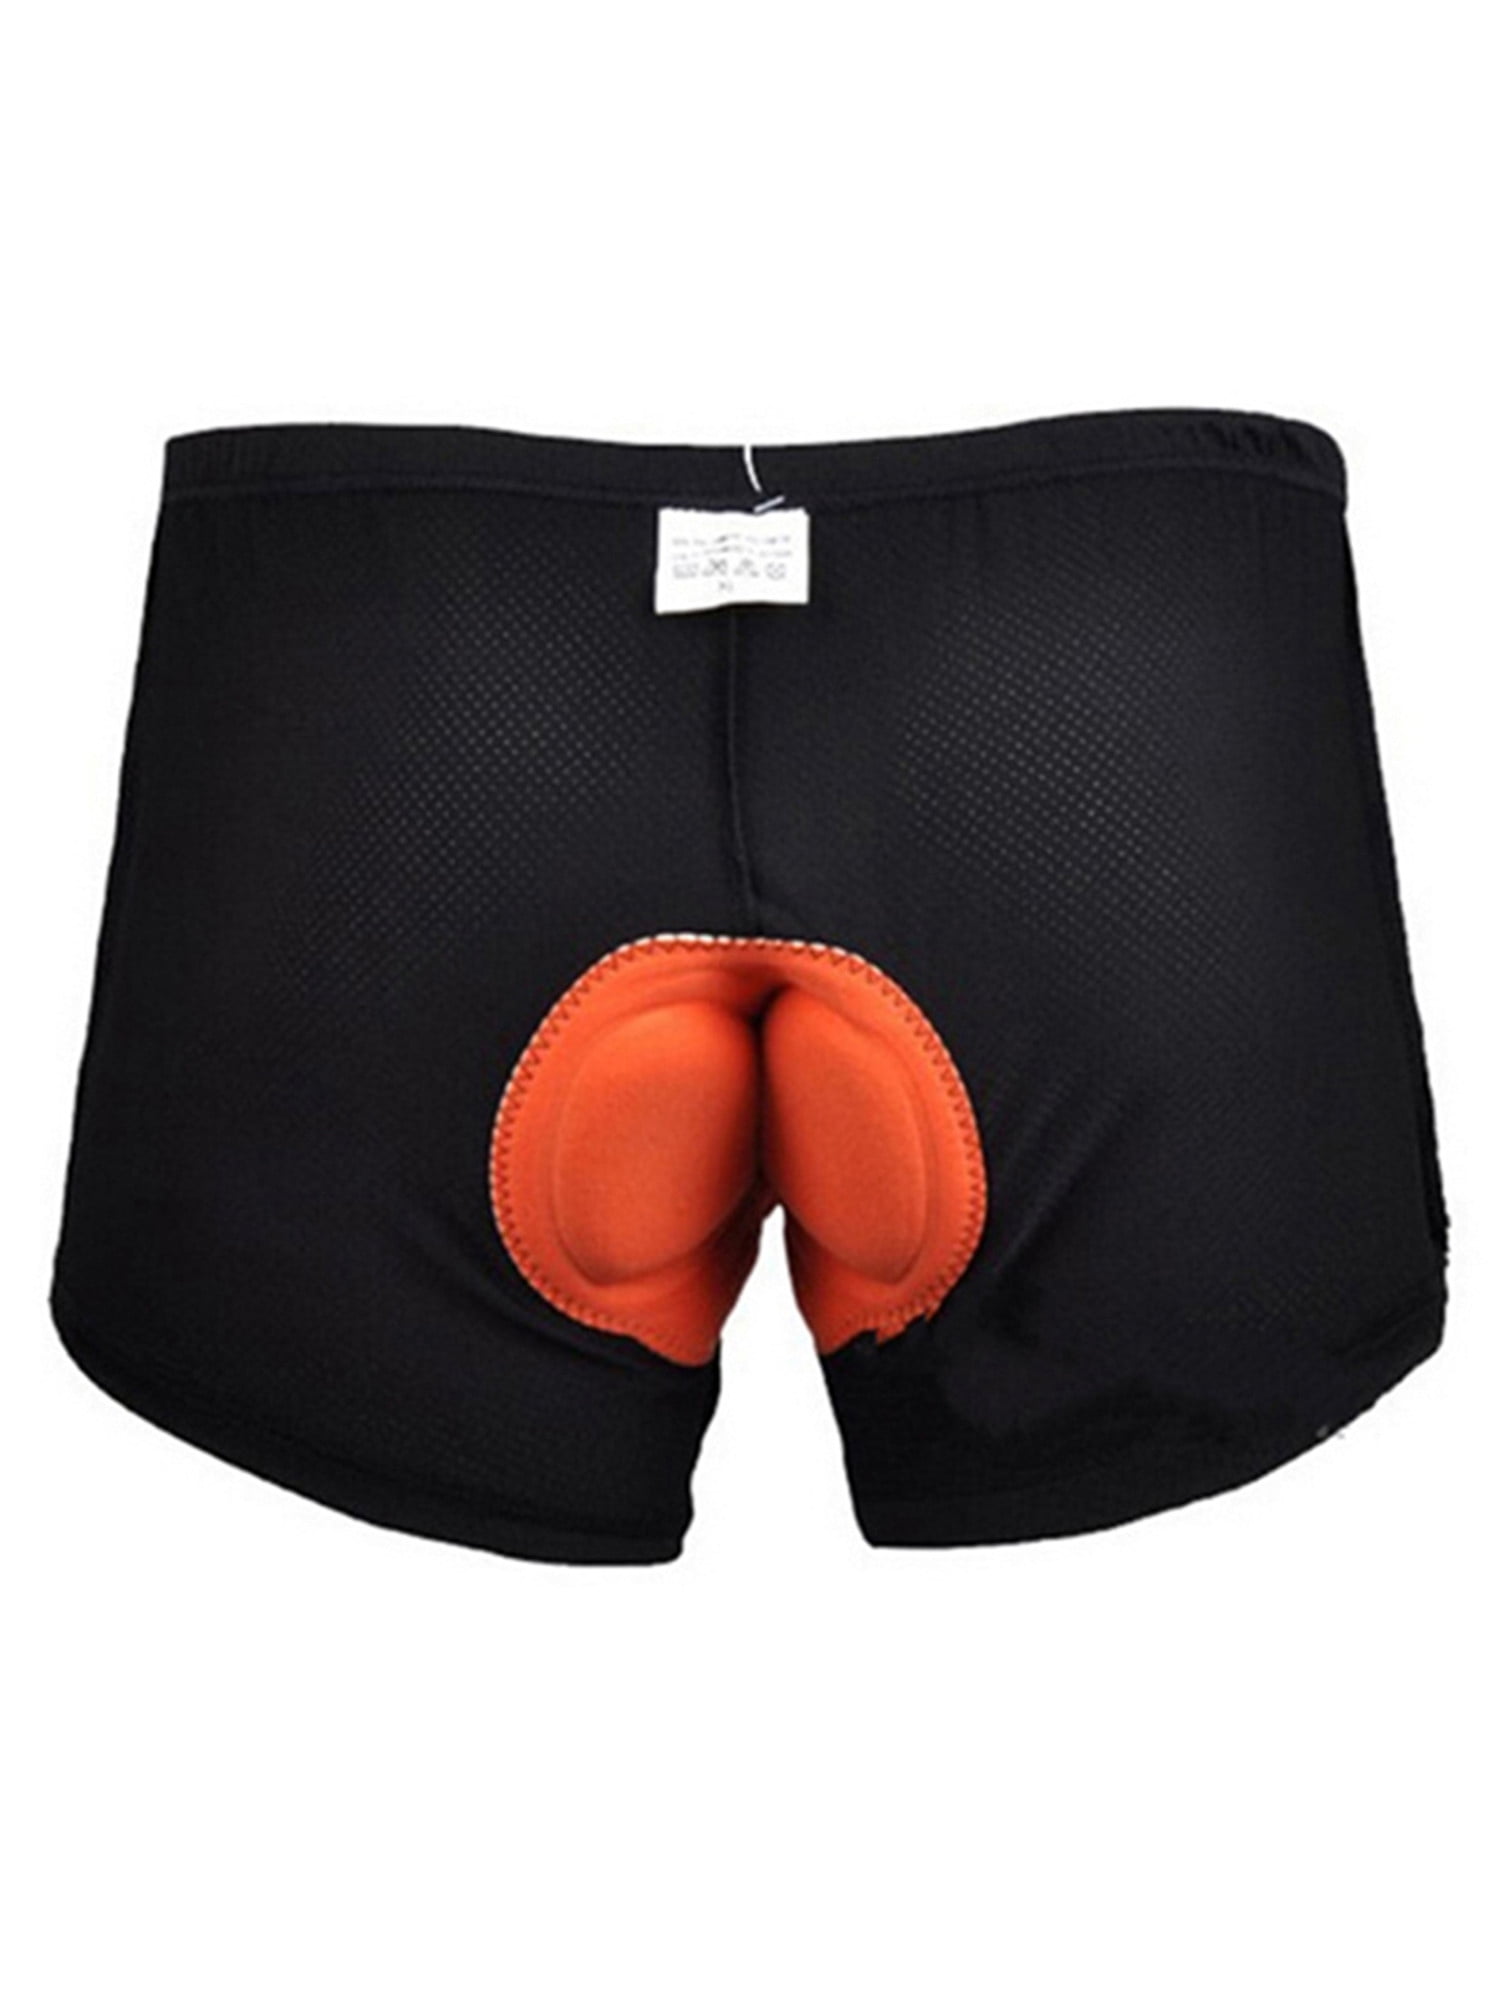 2018  Cycling Shorts With Soft Cushion Unisex Bicycle Bermudas Underwear 